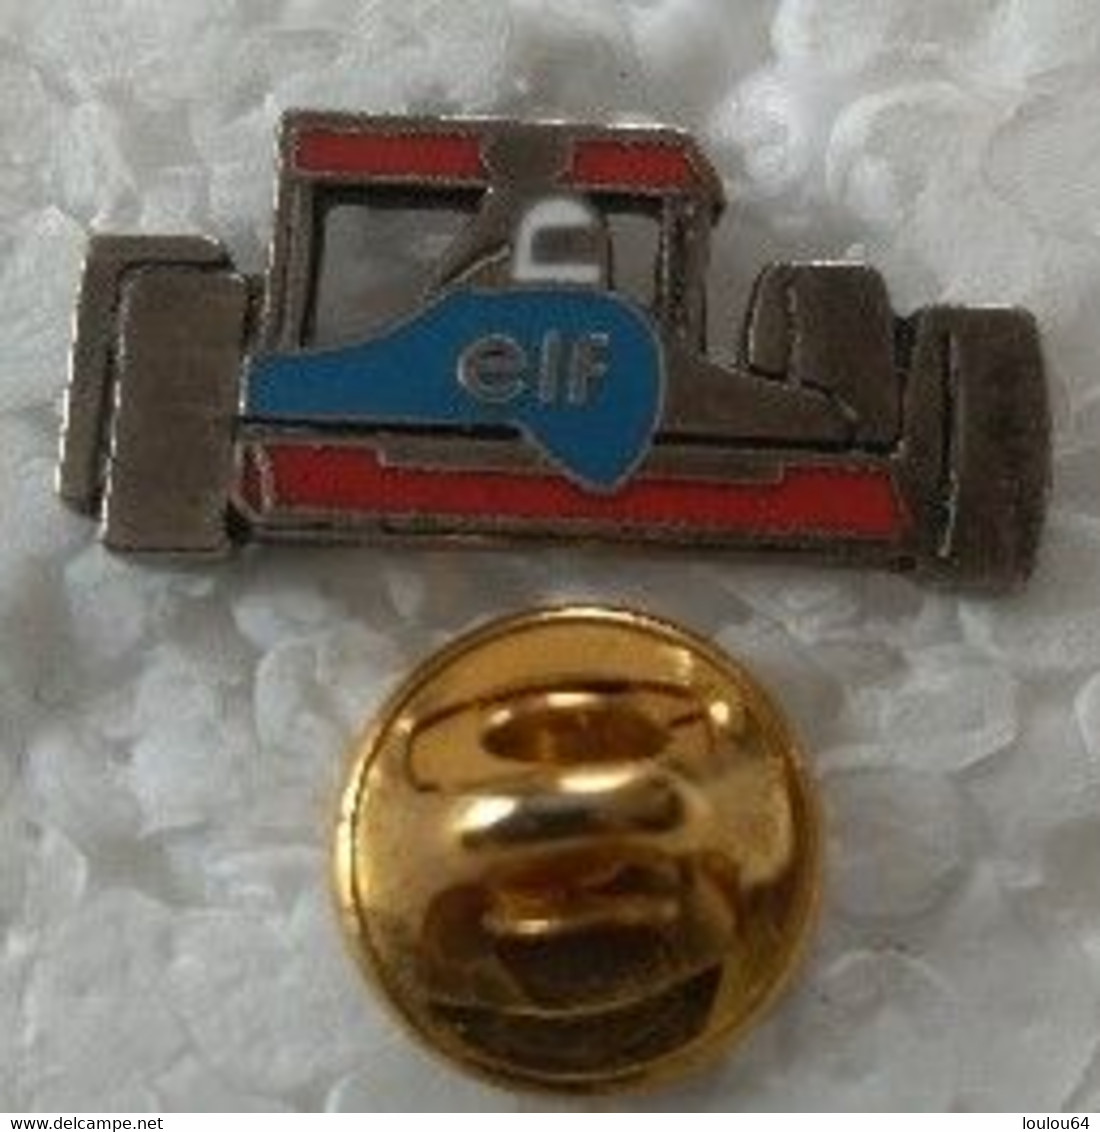 Pin's - Sports - Automobiles - ELF - - Automobile - F1